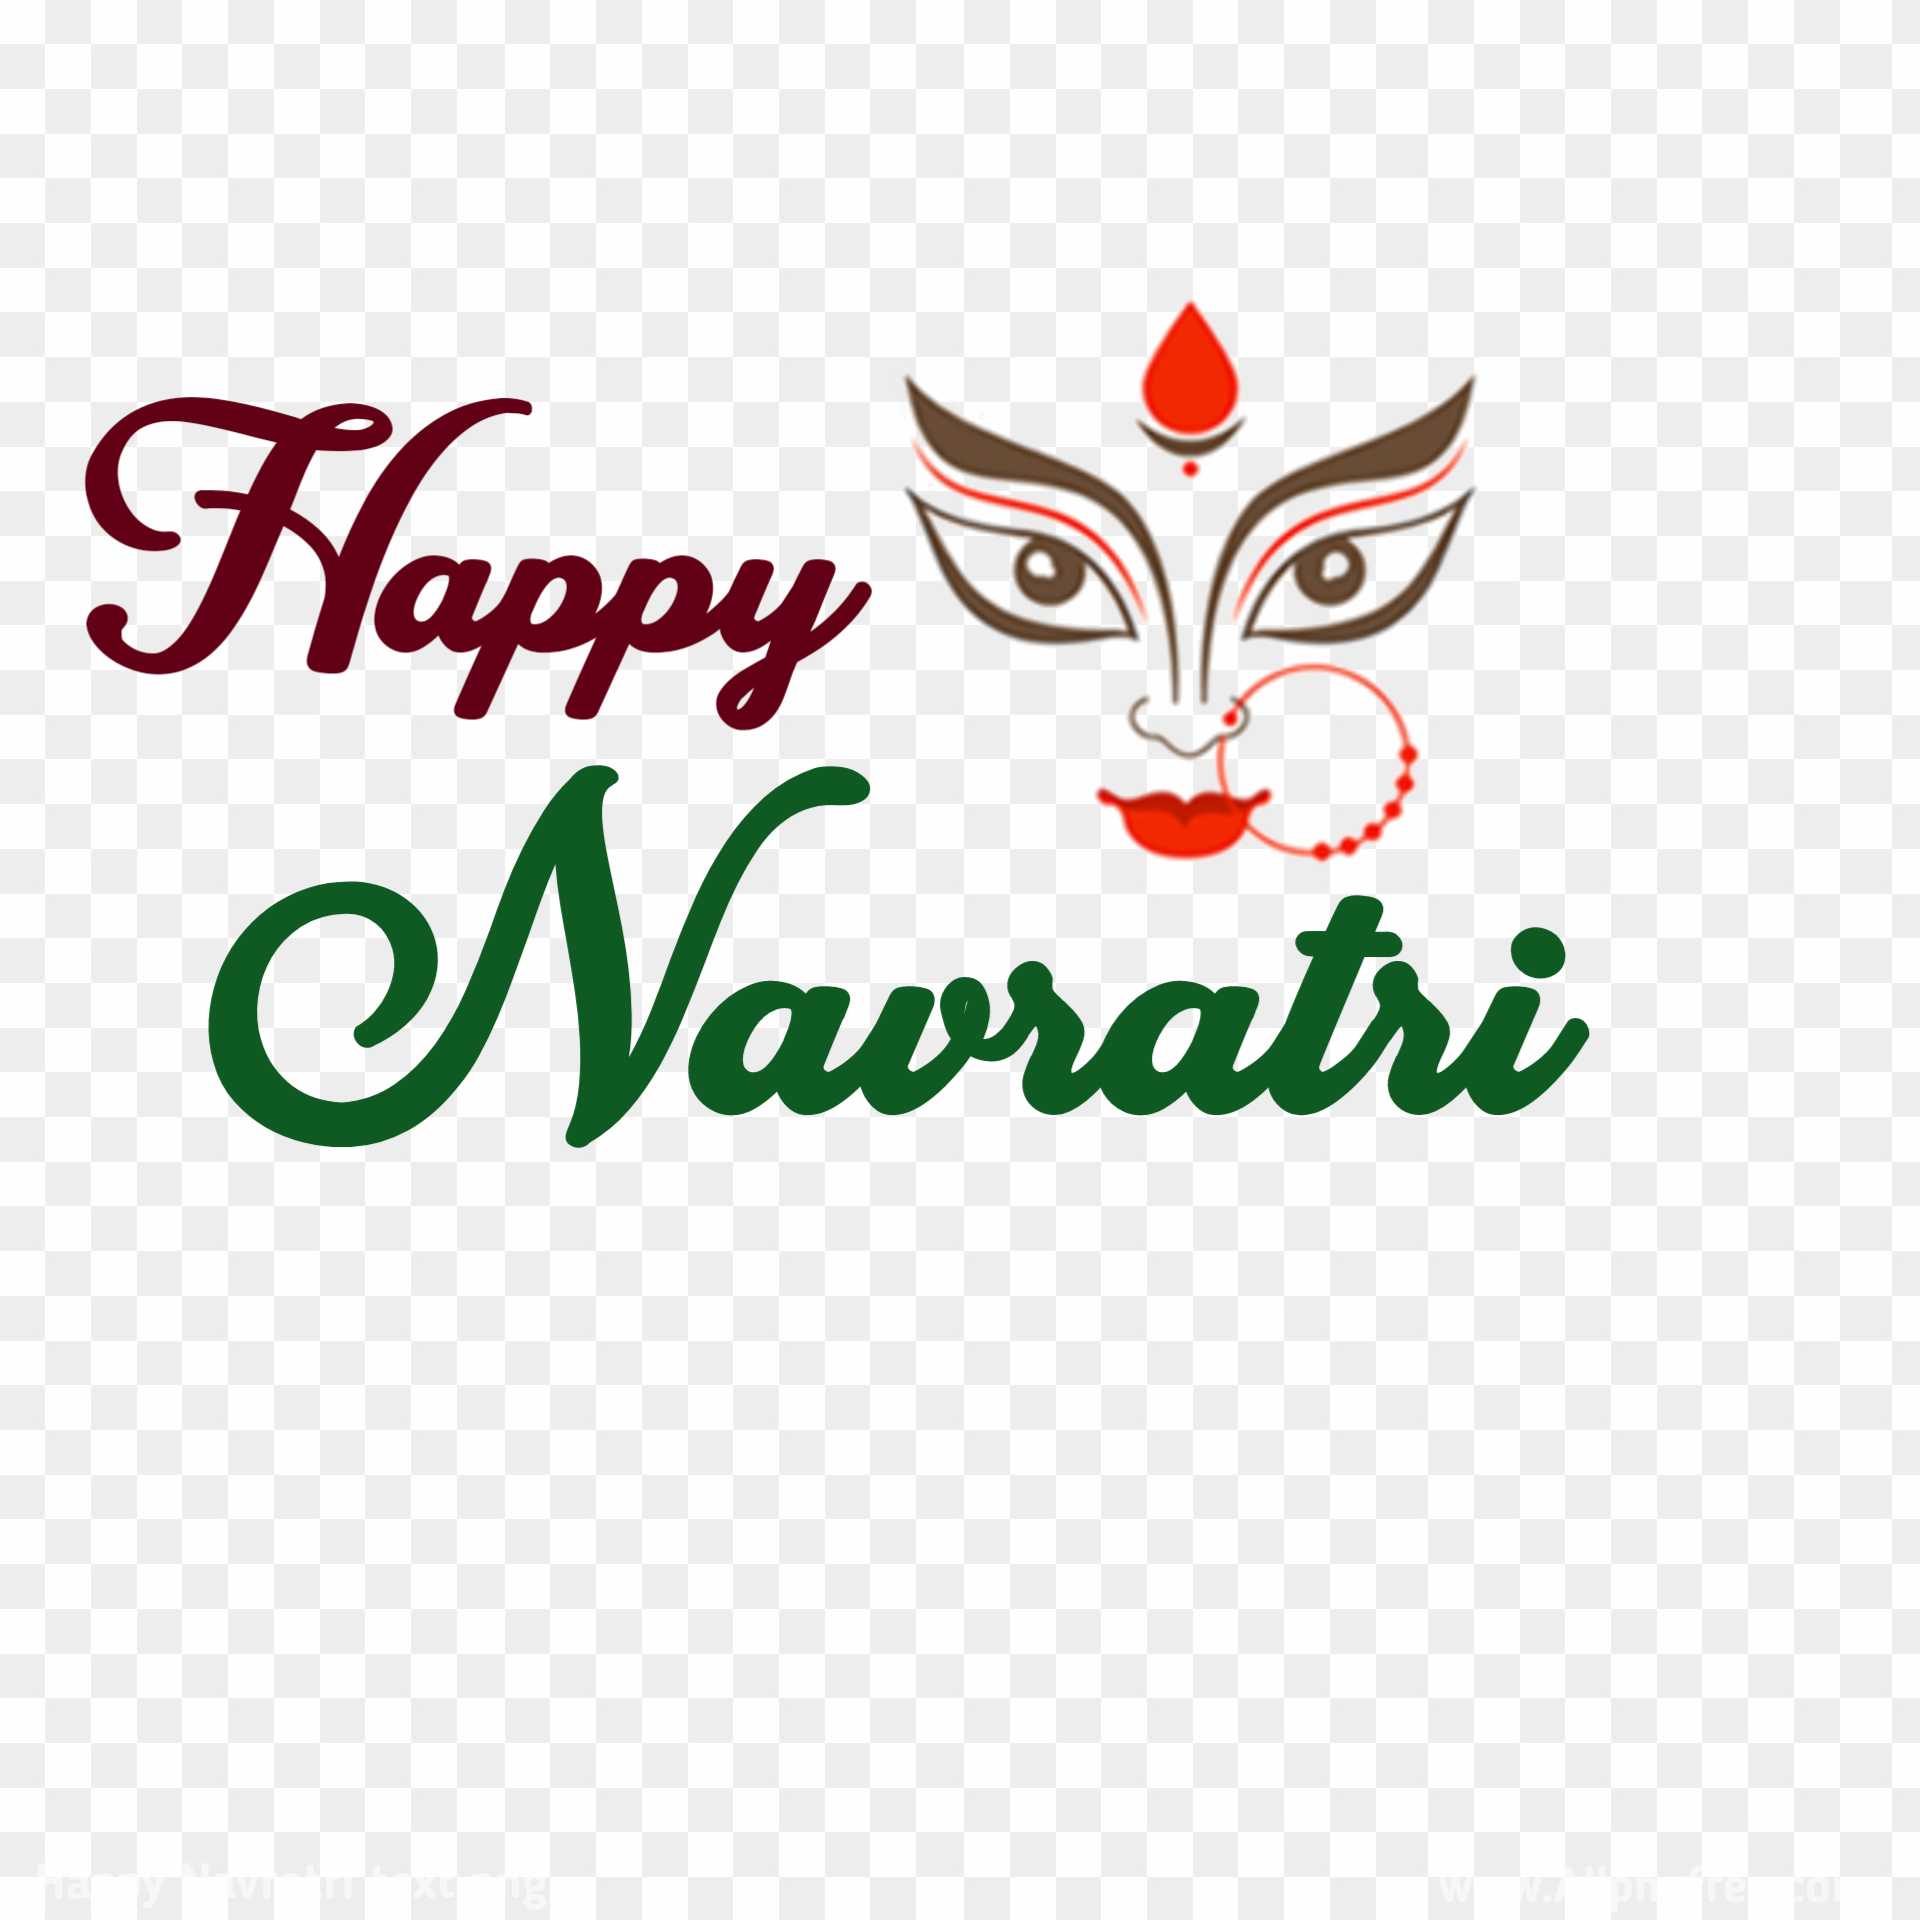 Happy navratri png images_ Durga Puja png images download 